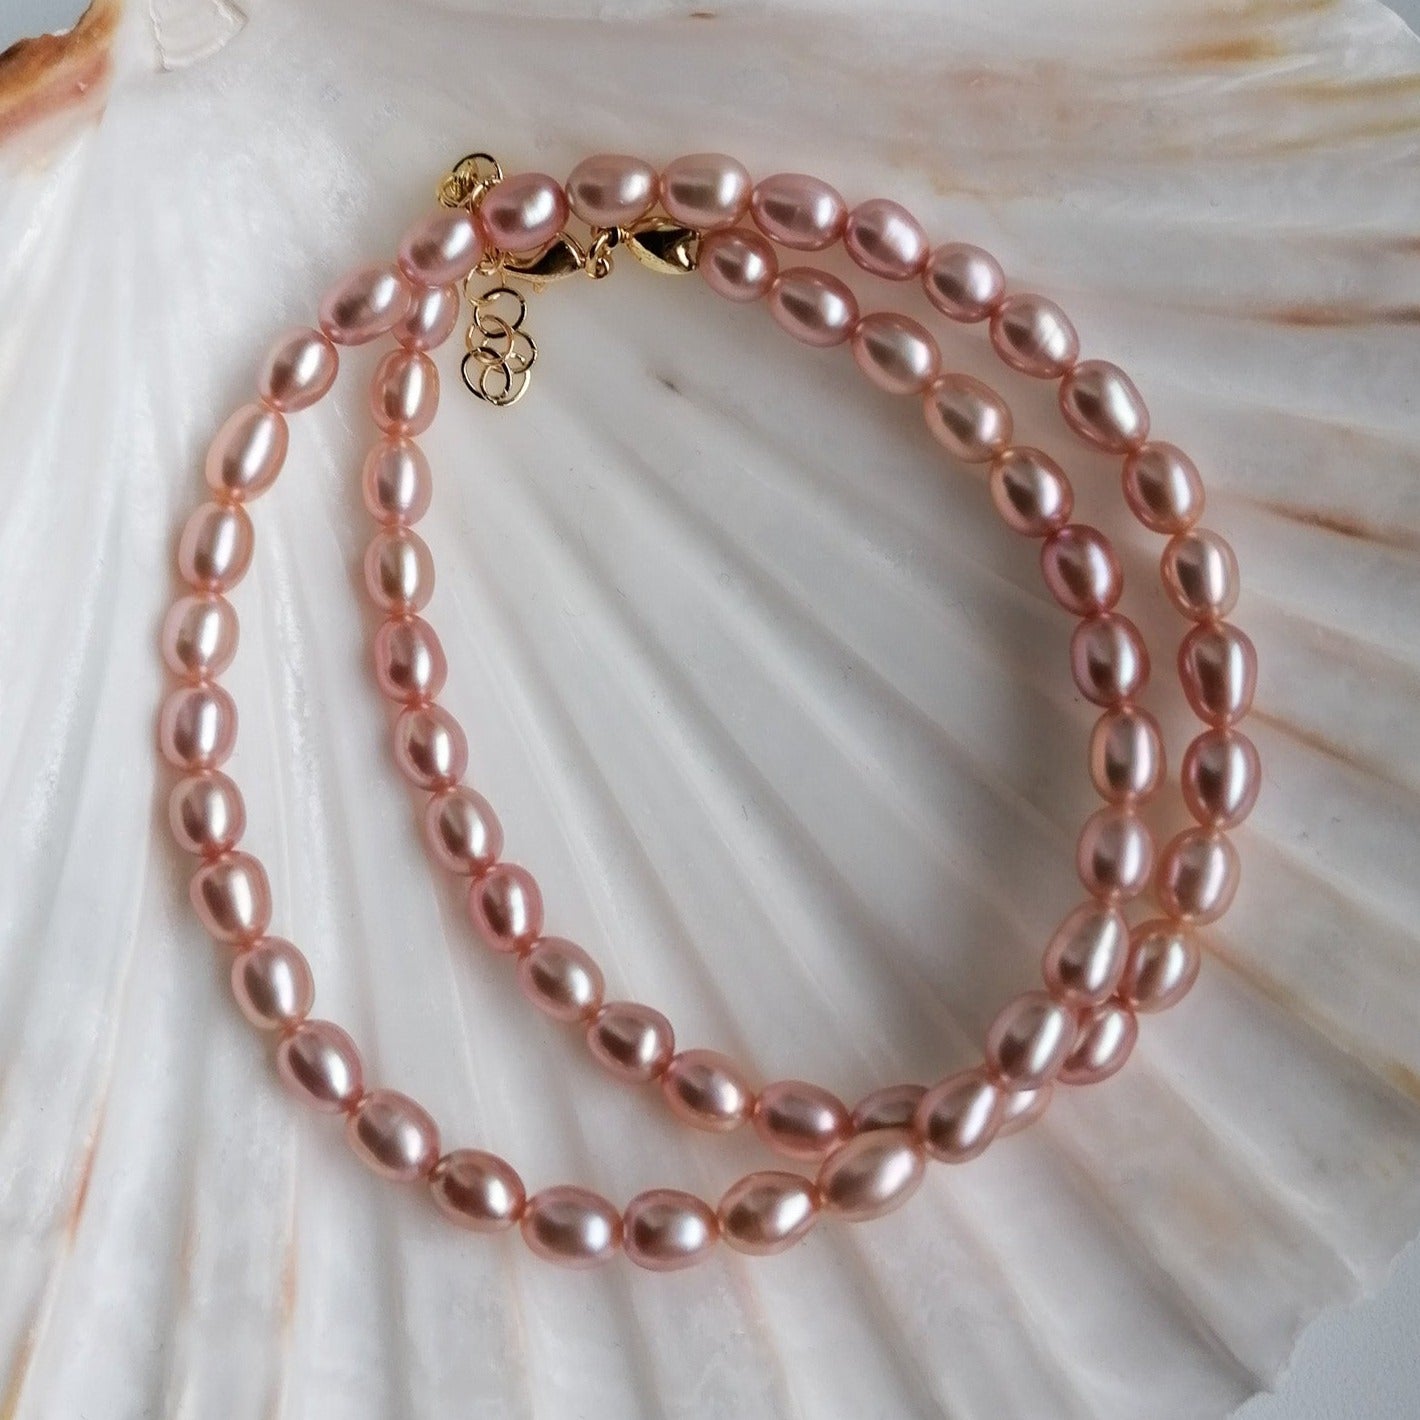 Dark rosé pearl necklace - gold filled